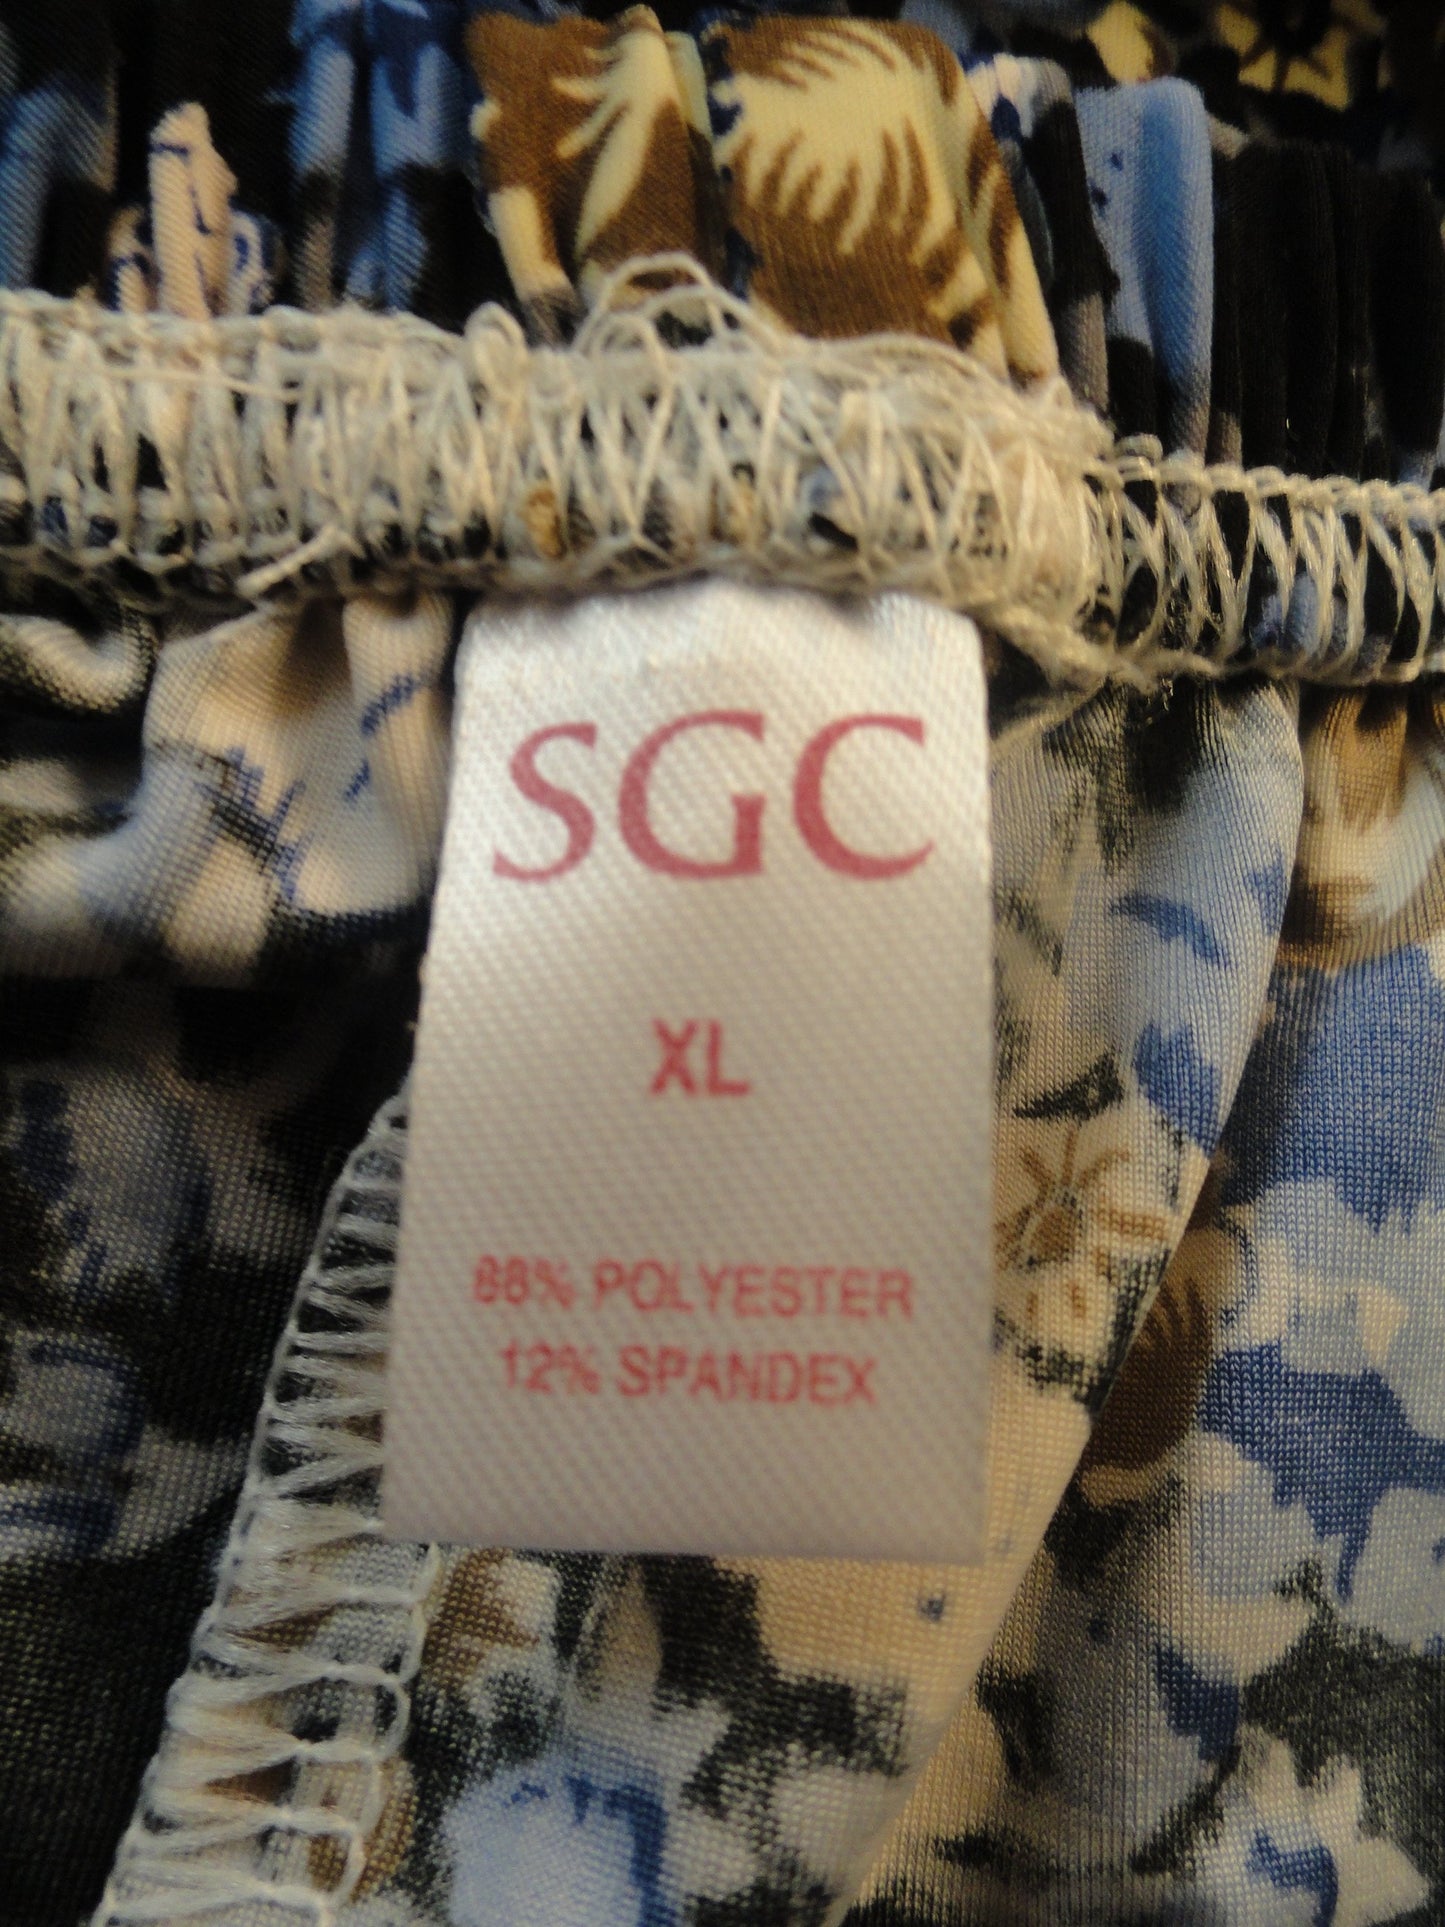 SGC Lounge Wear Two Piece Set  Size XL NWT SKU 000113